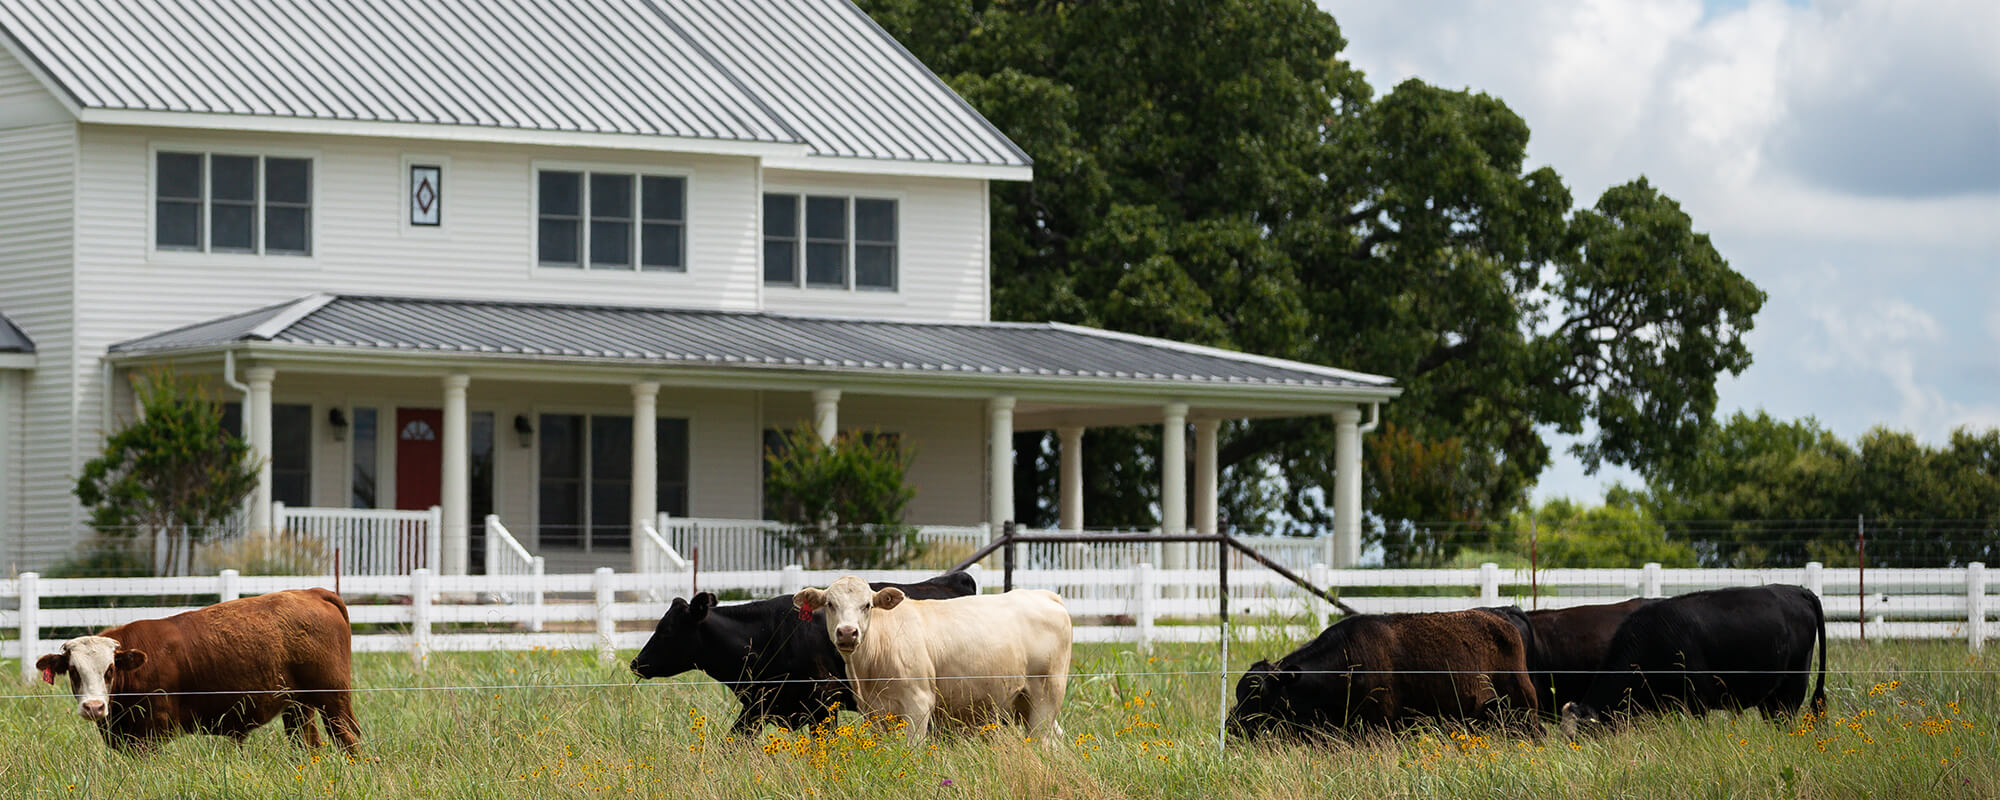 Cattle grazing near a farmhouse